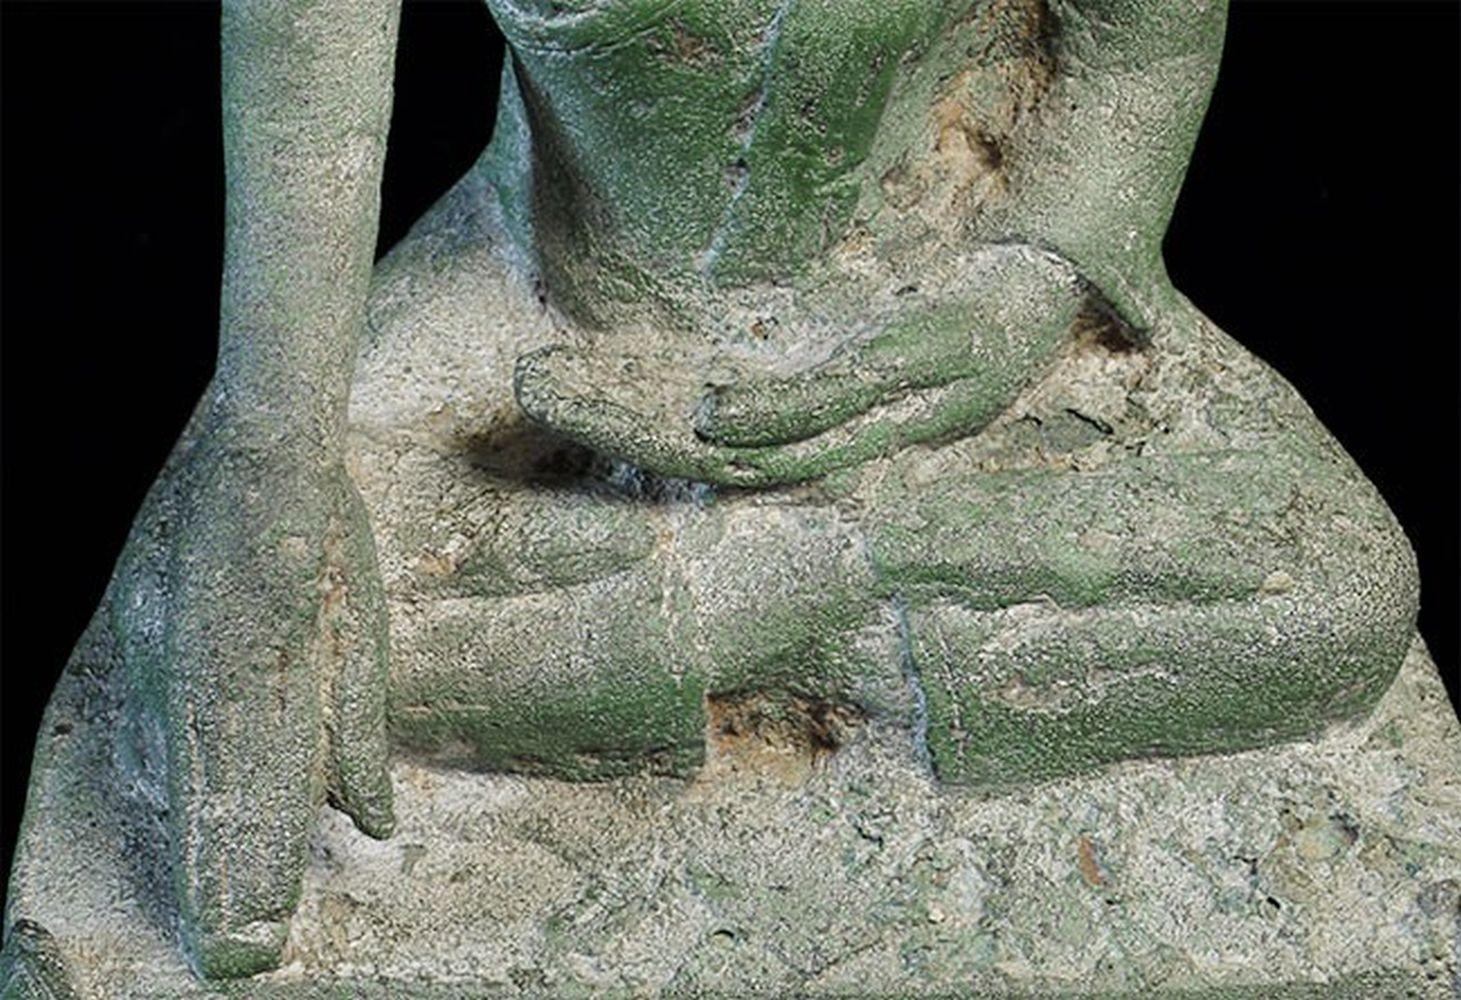  11. Jh. Bronze Buddha- Pyu/Pagan Burma Seltene, mächtige Antike- TL Test! - 8439 im Angebot 3